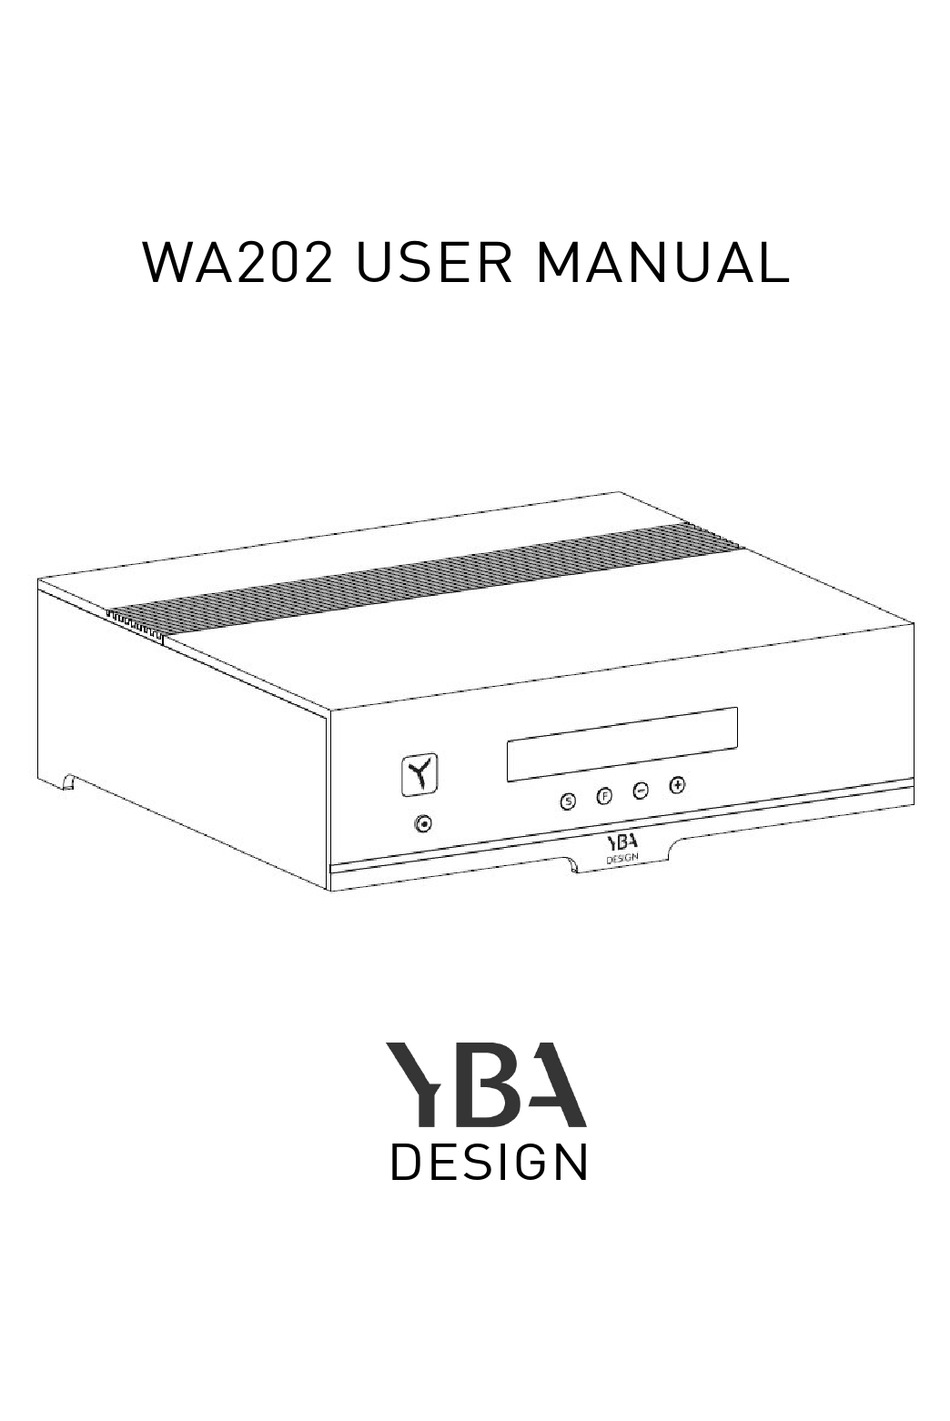 YBA DESIGN WA202 USER MANUAL Pdf Download | ManualsLib